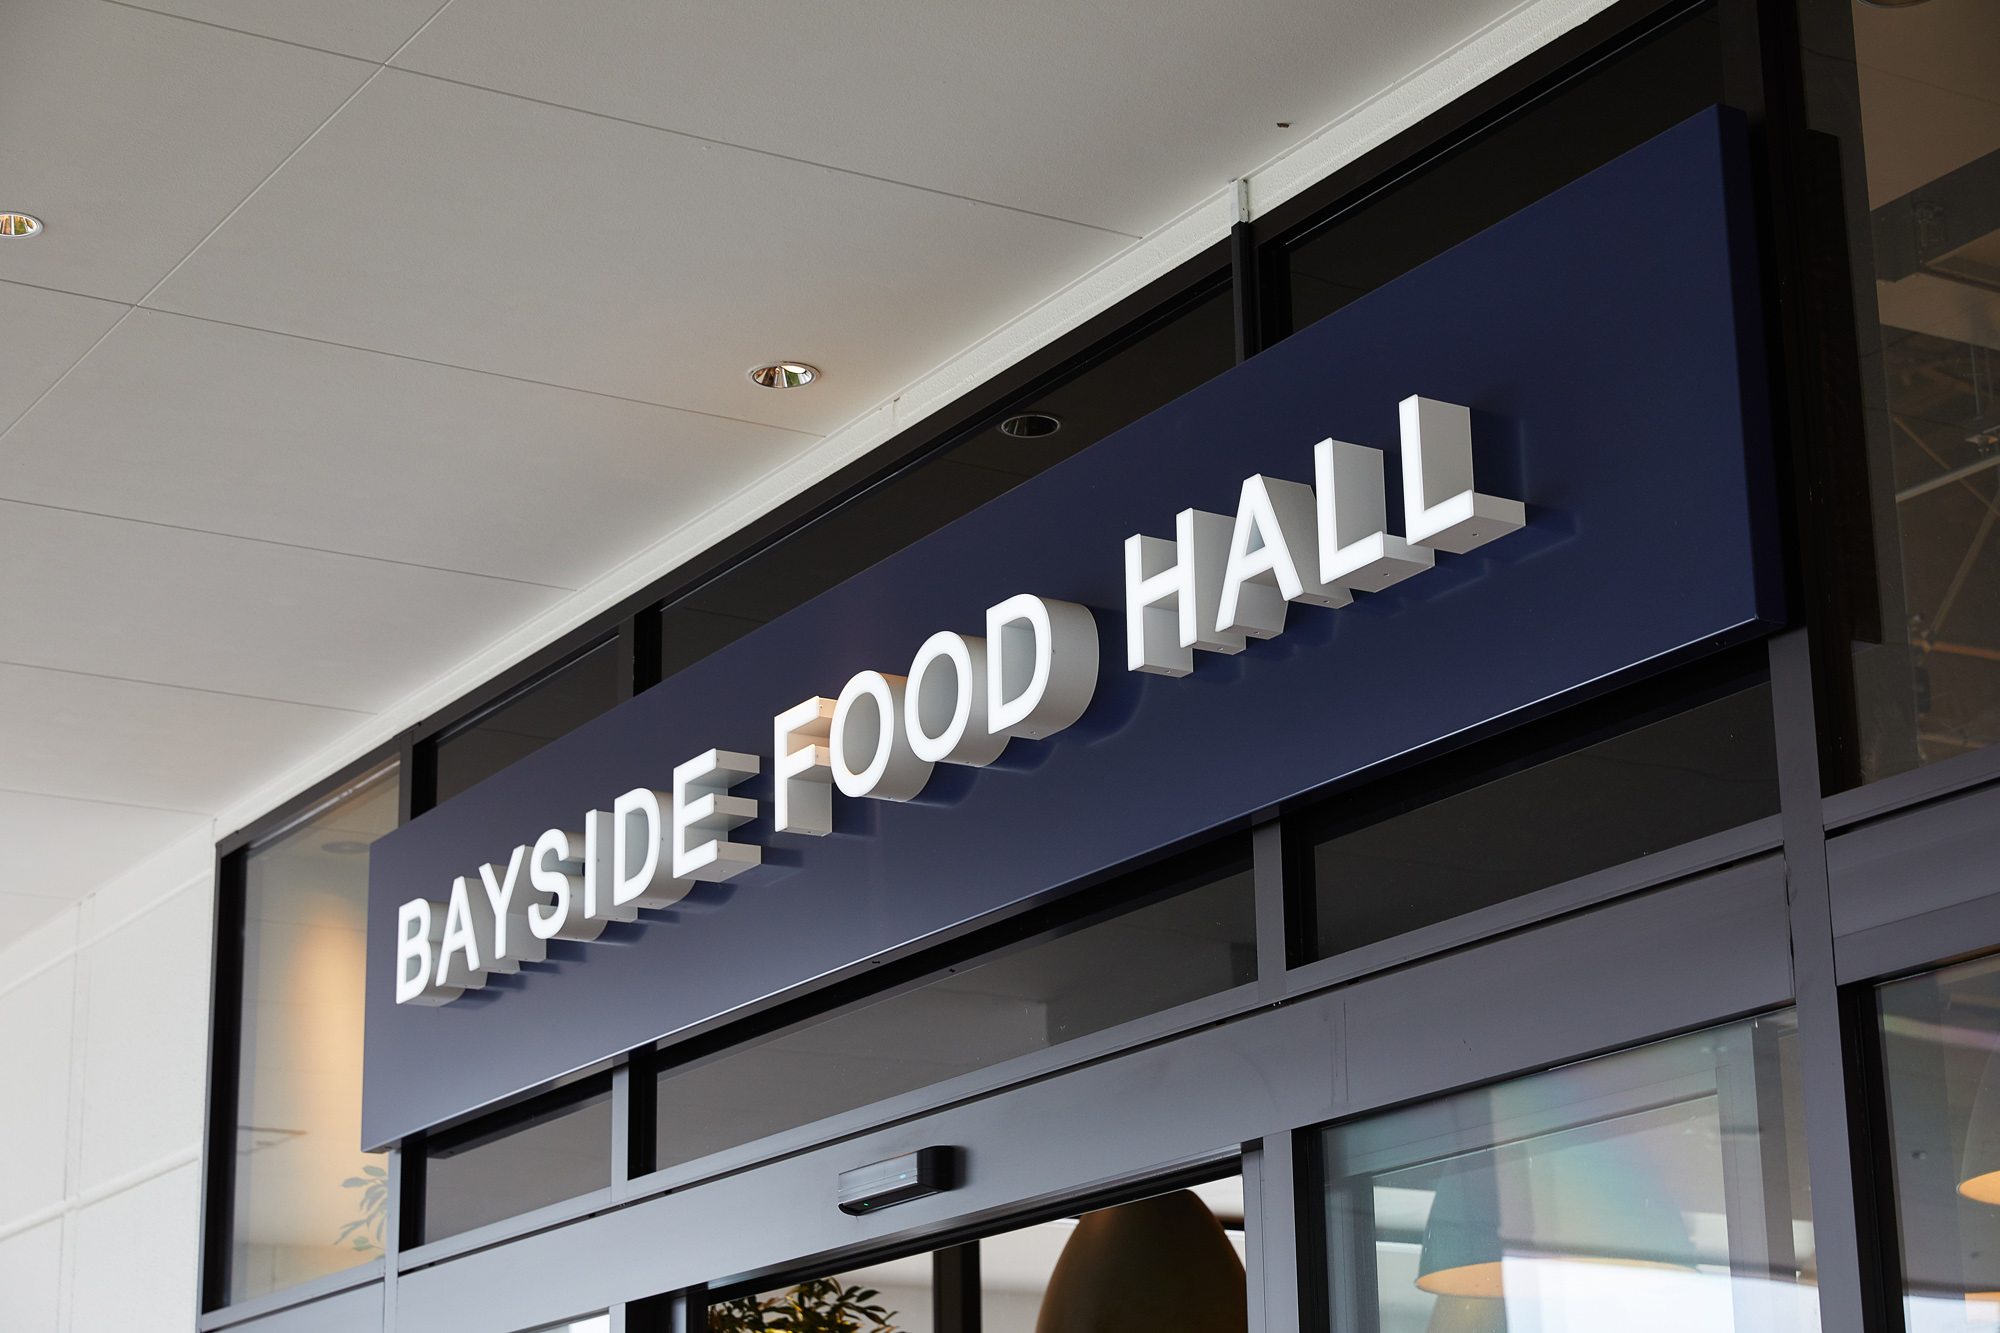 BAYSIDE FOOD HALL 横浜ベイサイド店の実績写真